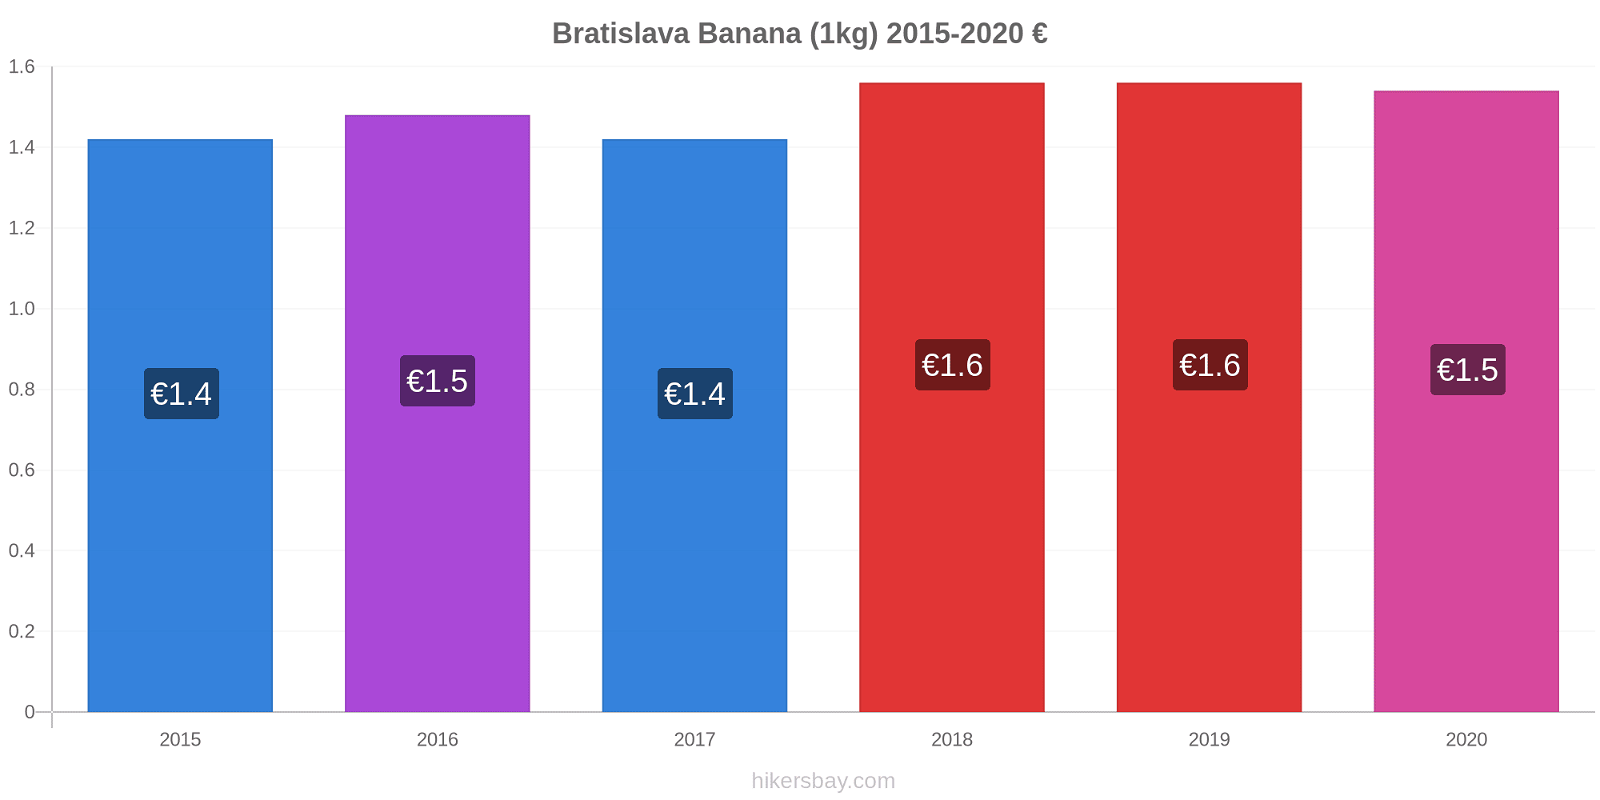 Bratislava modificări de preț Banana (1kg) hikersbay.com